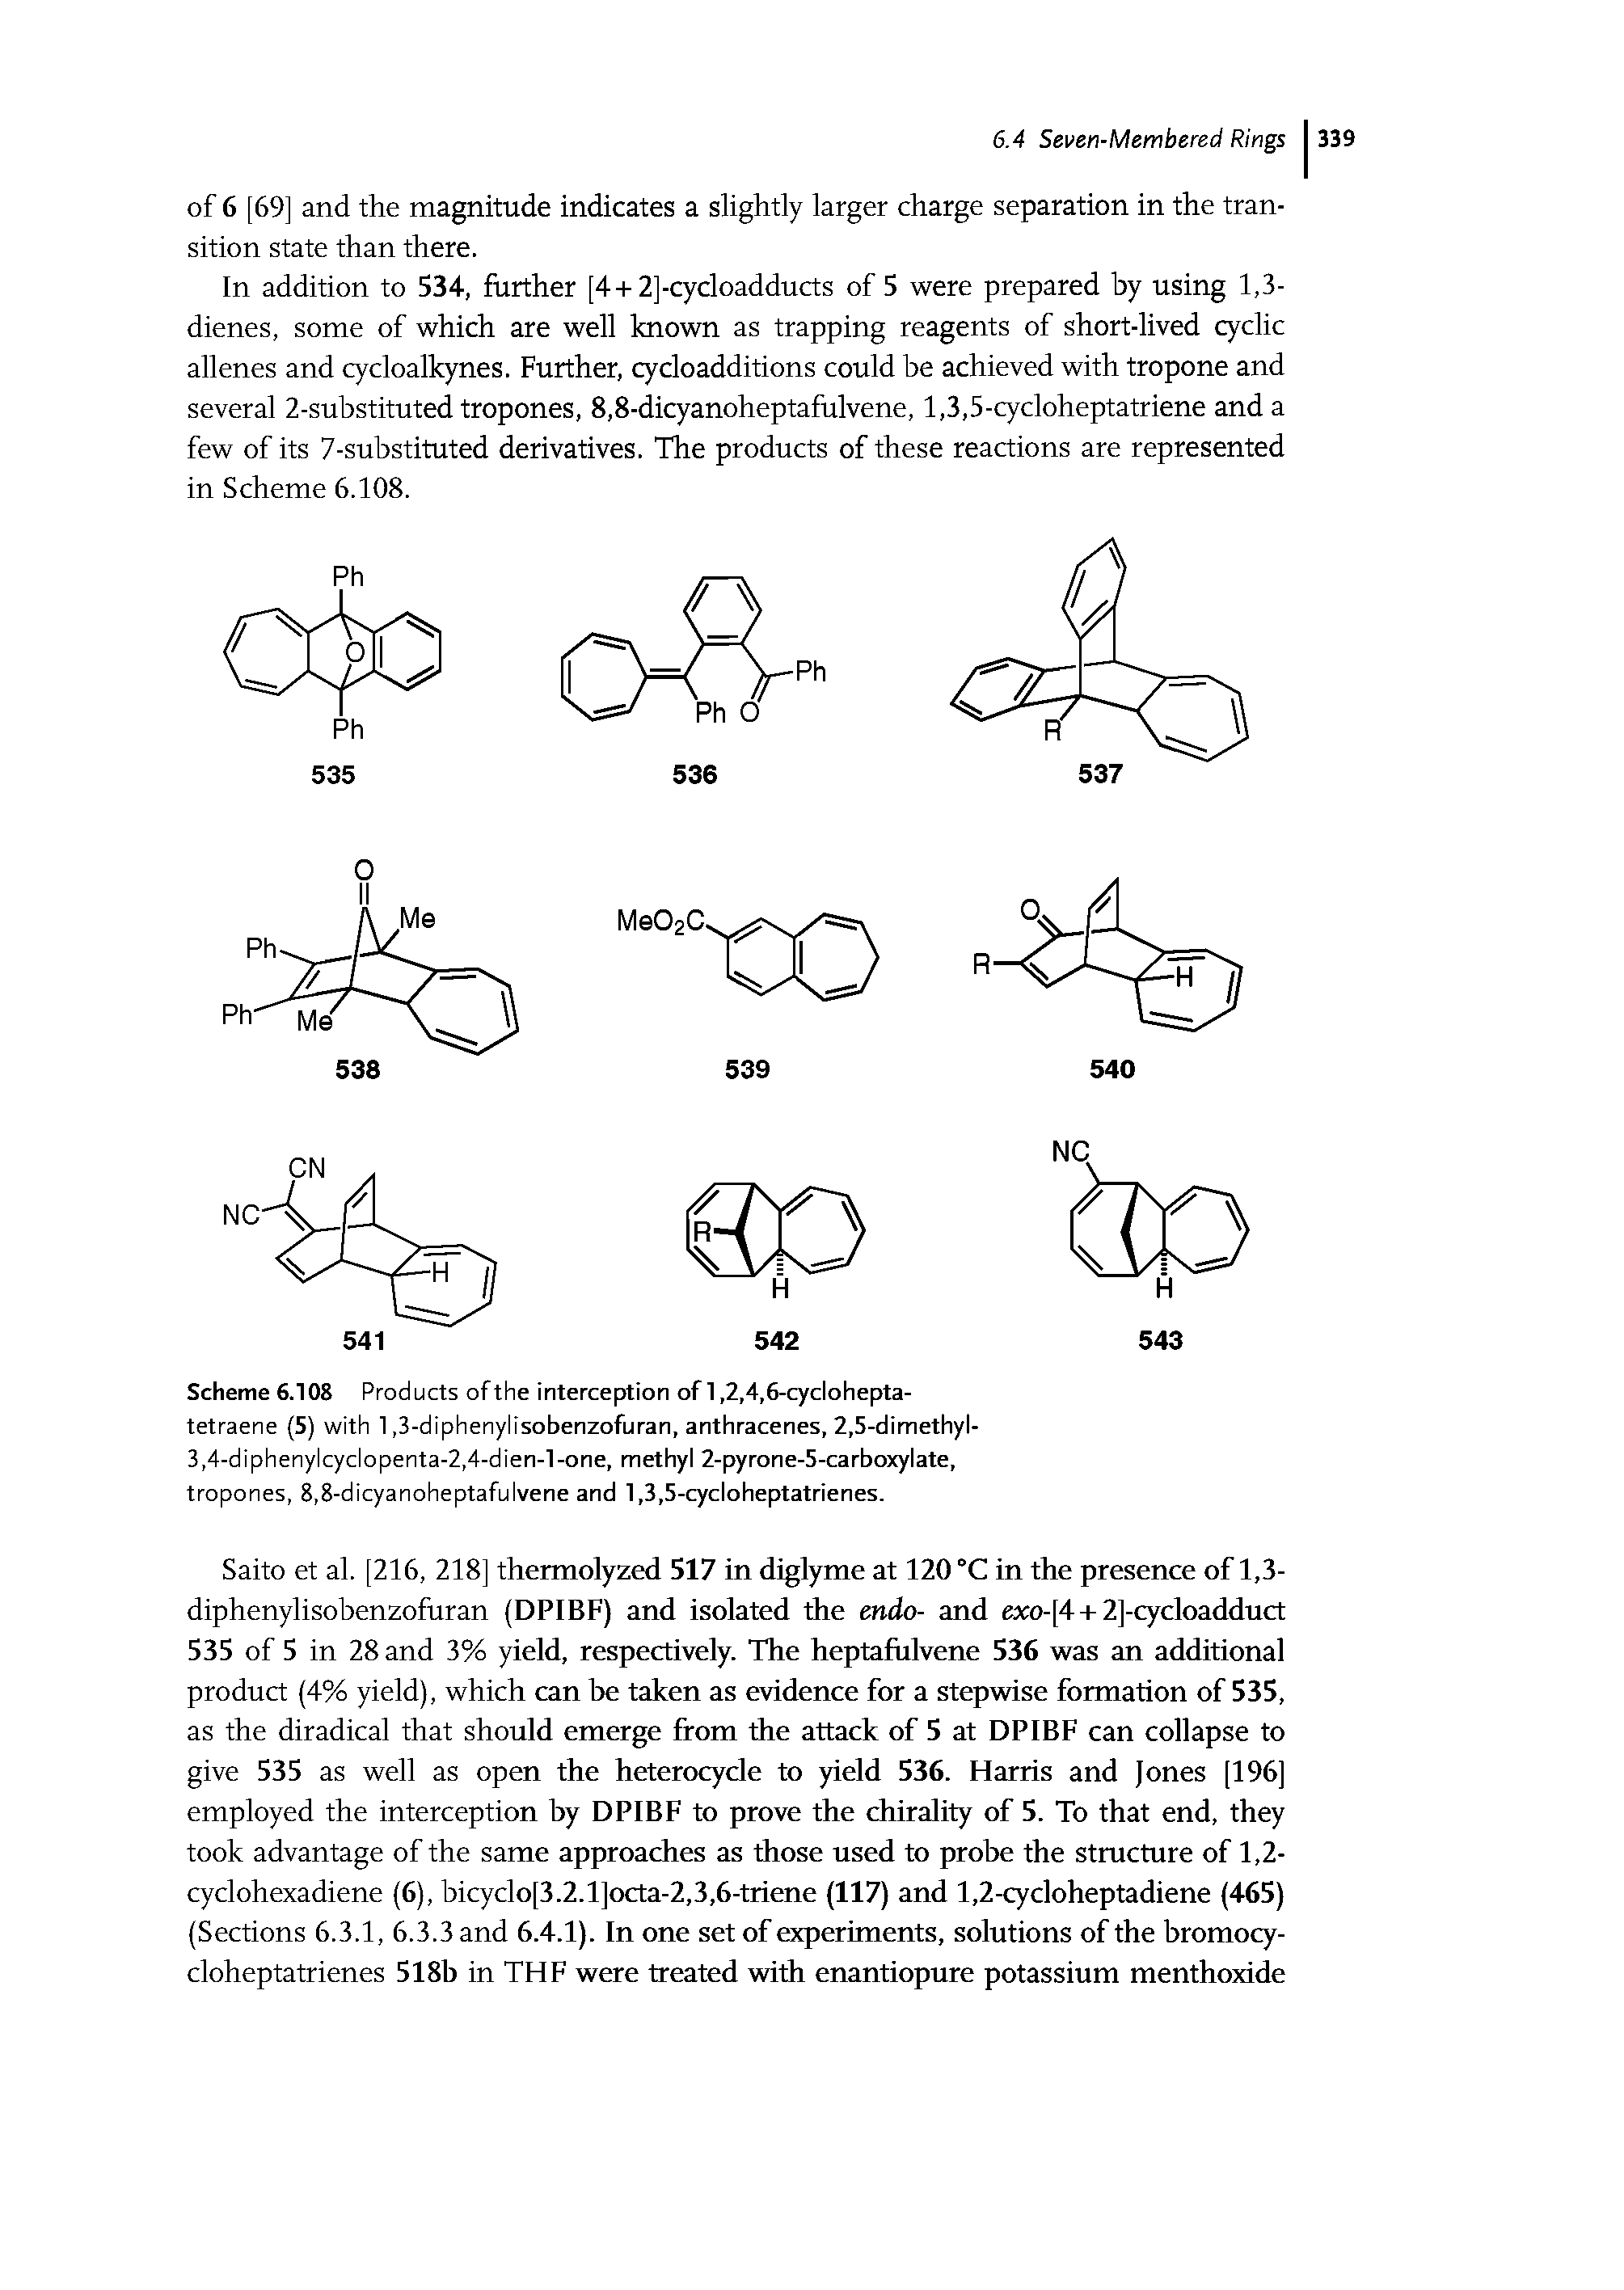 Scheme 6.108 Products ofthe interception of 1,2,4,6-cyclohepta-tetraene (5) with 1,3-diphenylisobenzofuran, anthracenes, 2,5-dimethyl-3,4-diphenylcyclopenta-2,4-dien-l-one, methyl 2-pyrone-5-carboxylate, tropones, 8,8-dicyanoheptafulvene and 1,3,5-cycloheptatrienes.